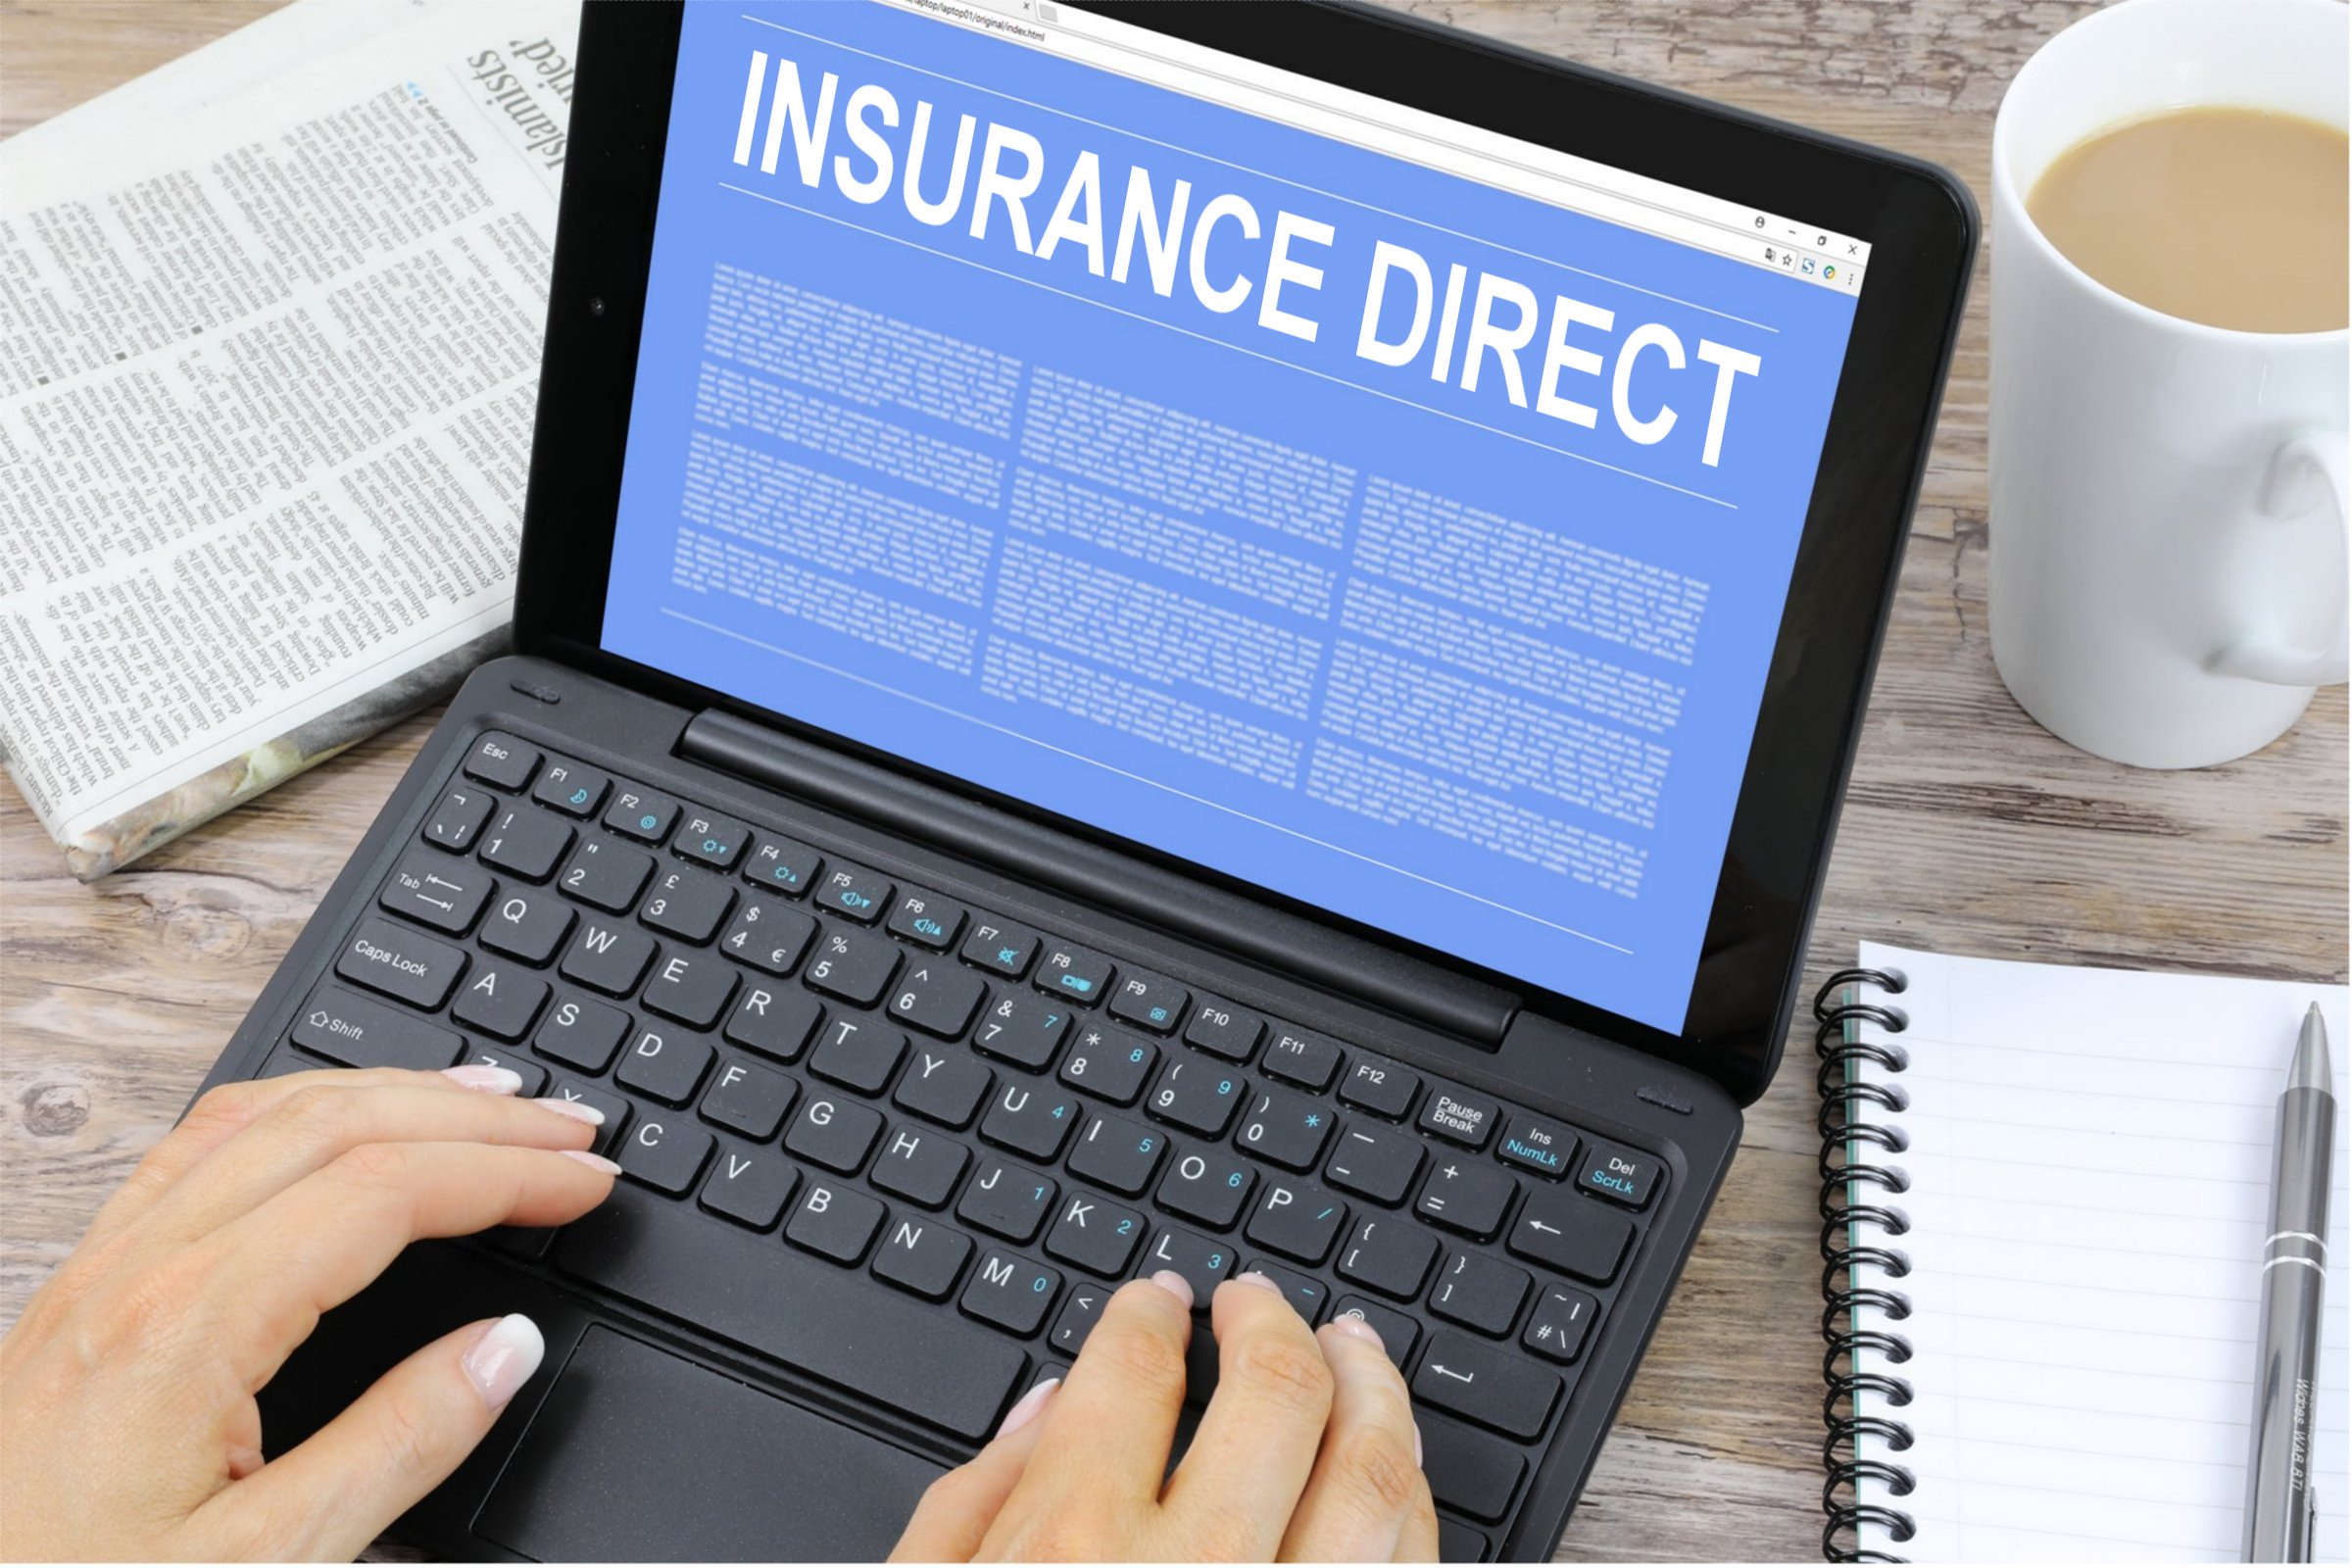 Insurance Direct